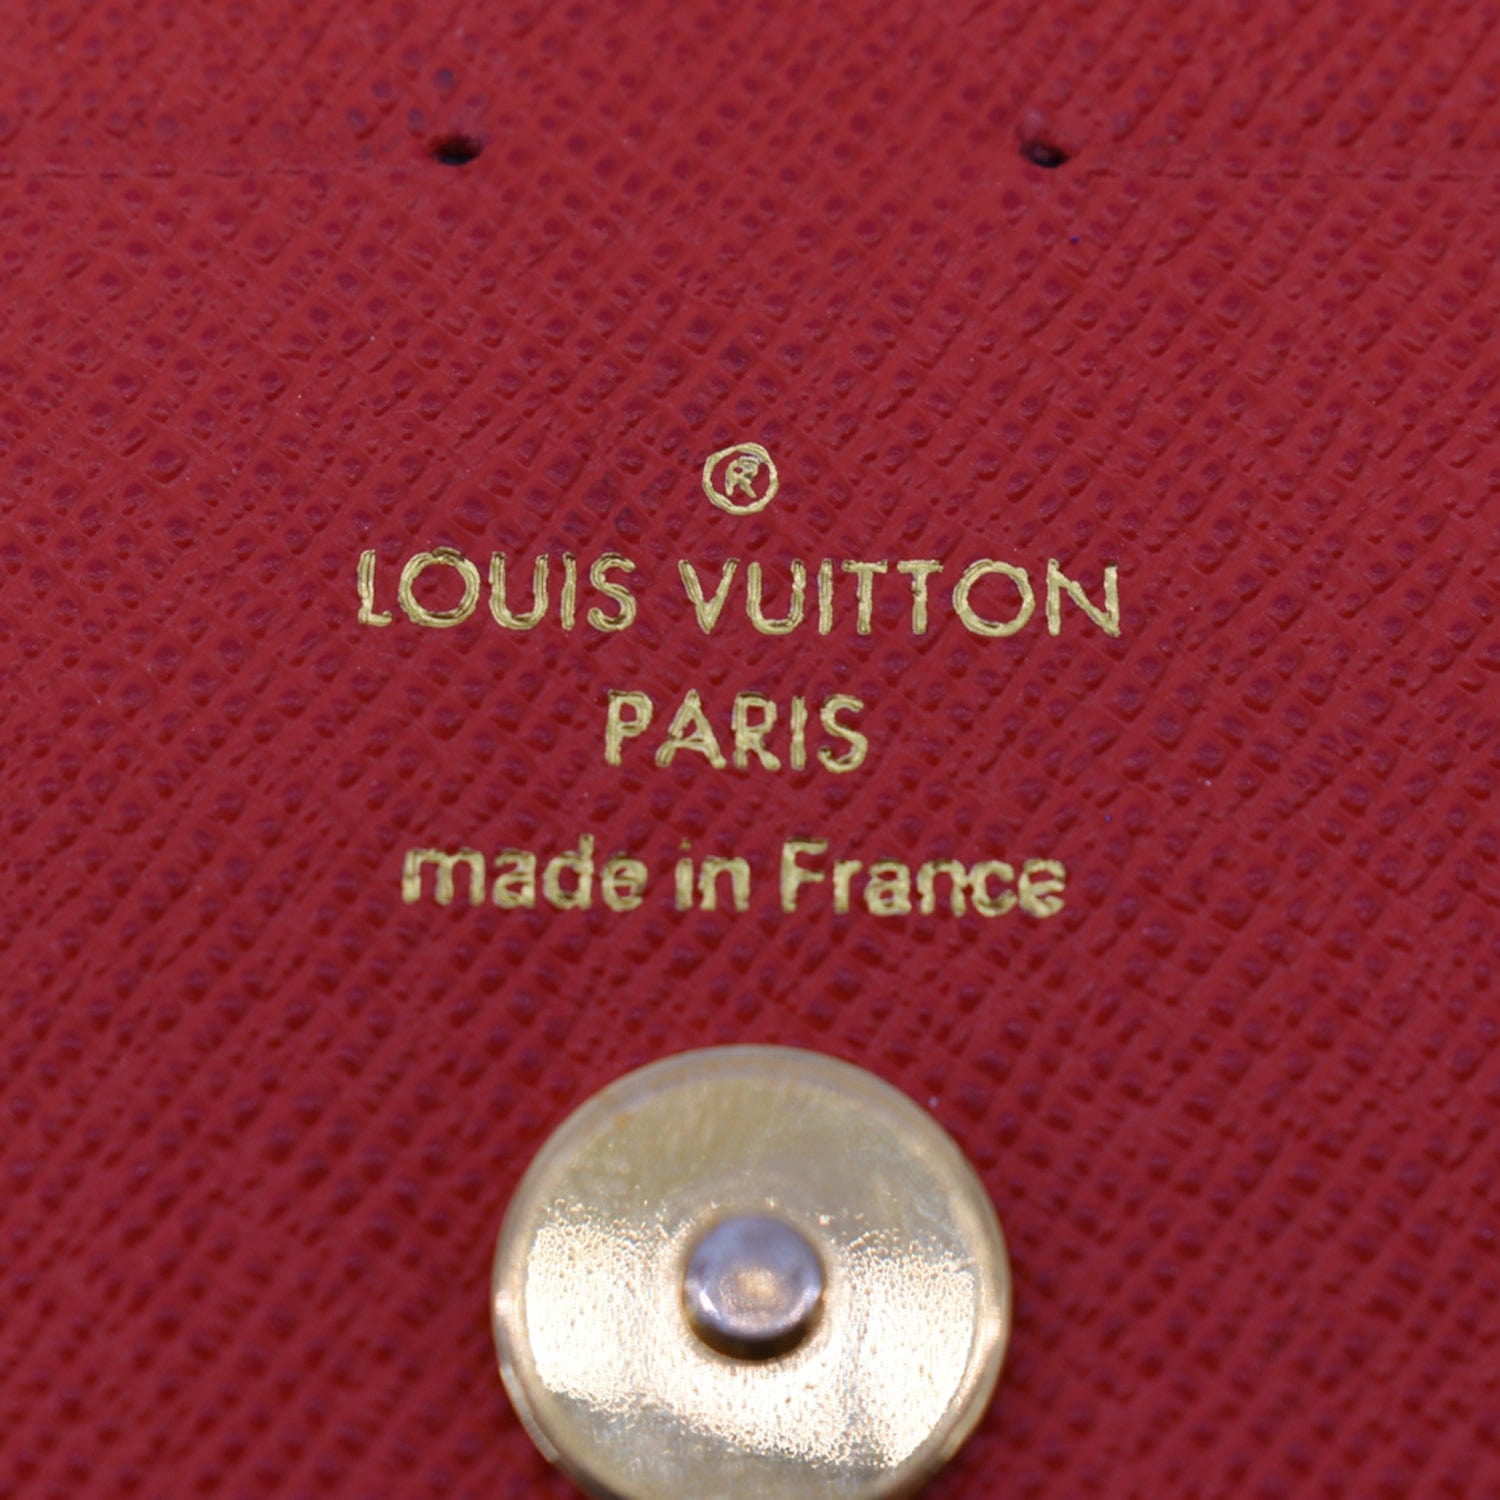 Buy Louis Vuitton Adele Compact Wallet Monogram Canvas Brown 3479401